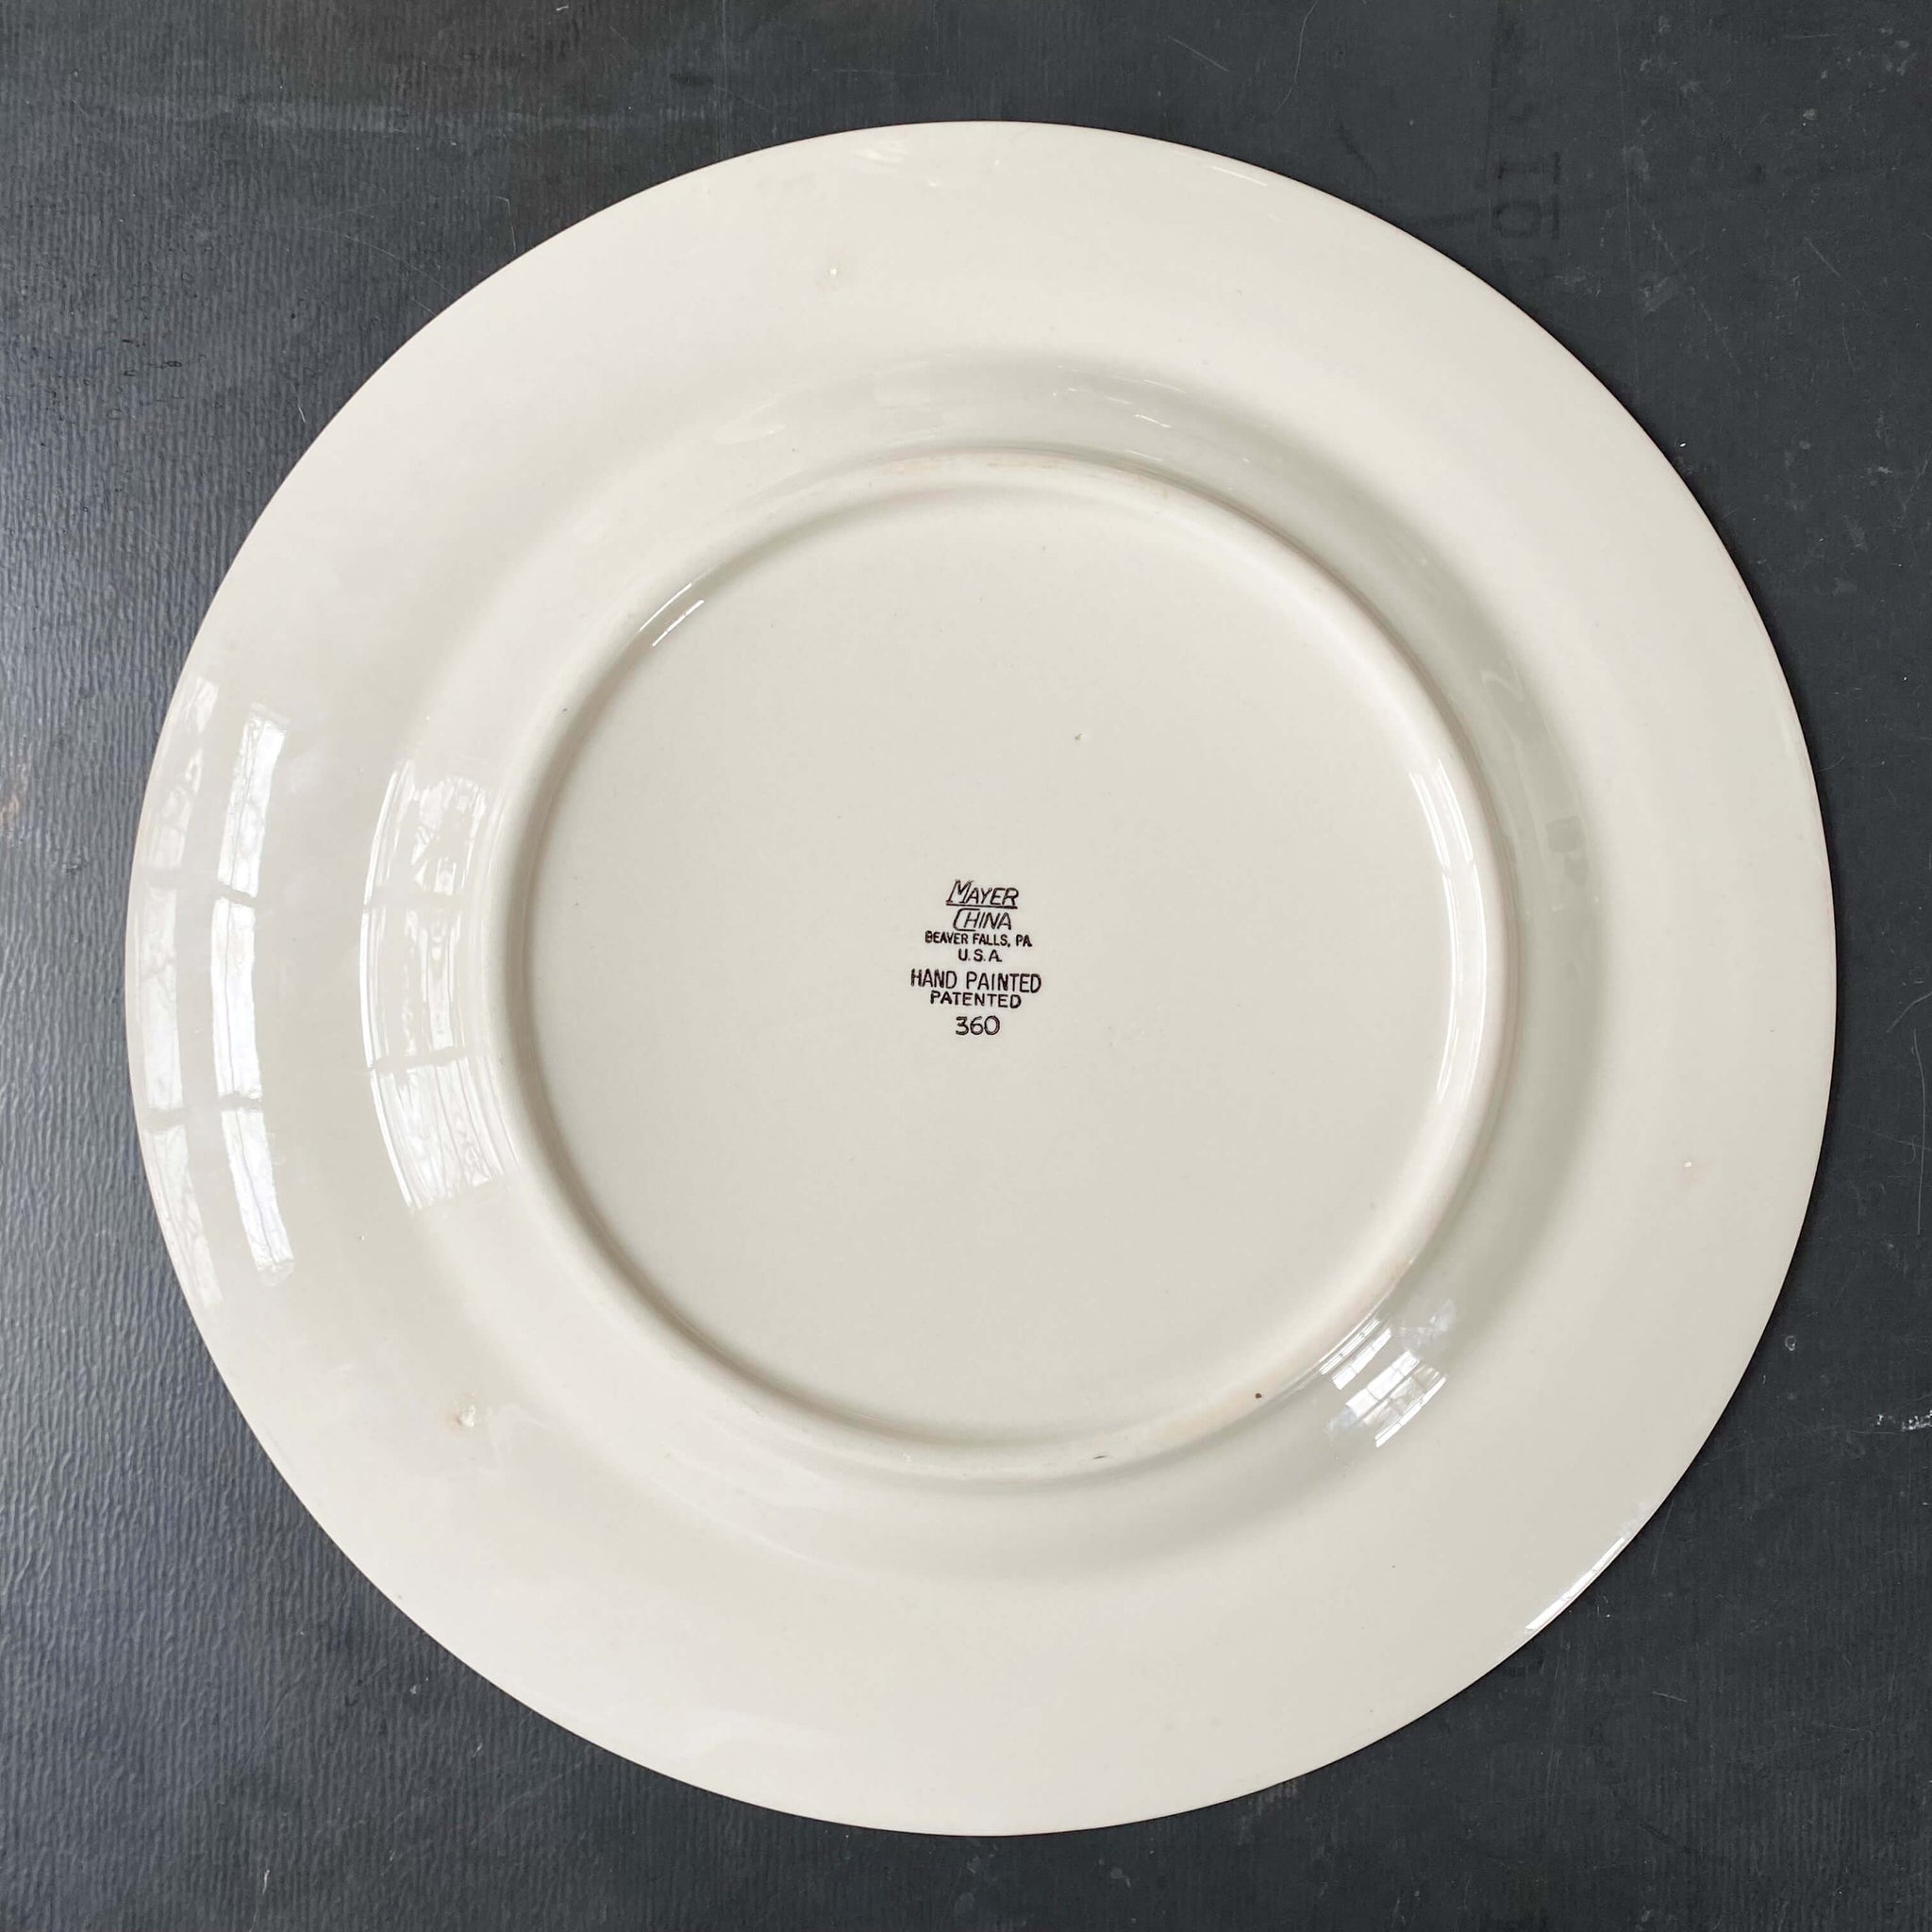 Vintage 1960s Charleston Restaurant Ware Dinner Plate - Perdita's by Mayer China circa 1960